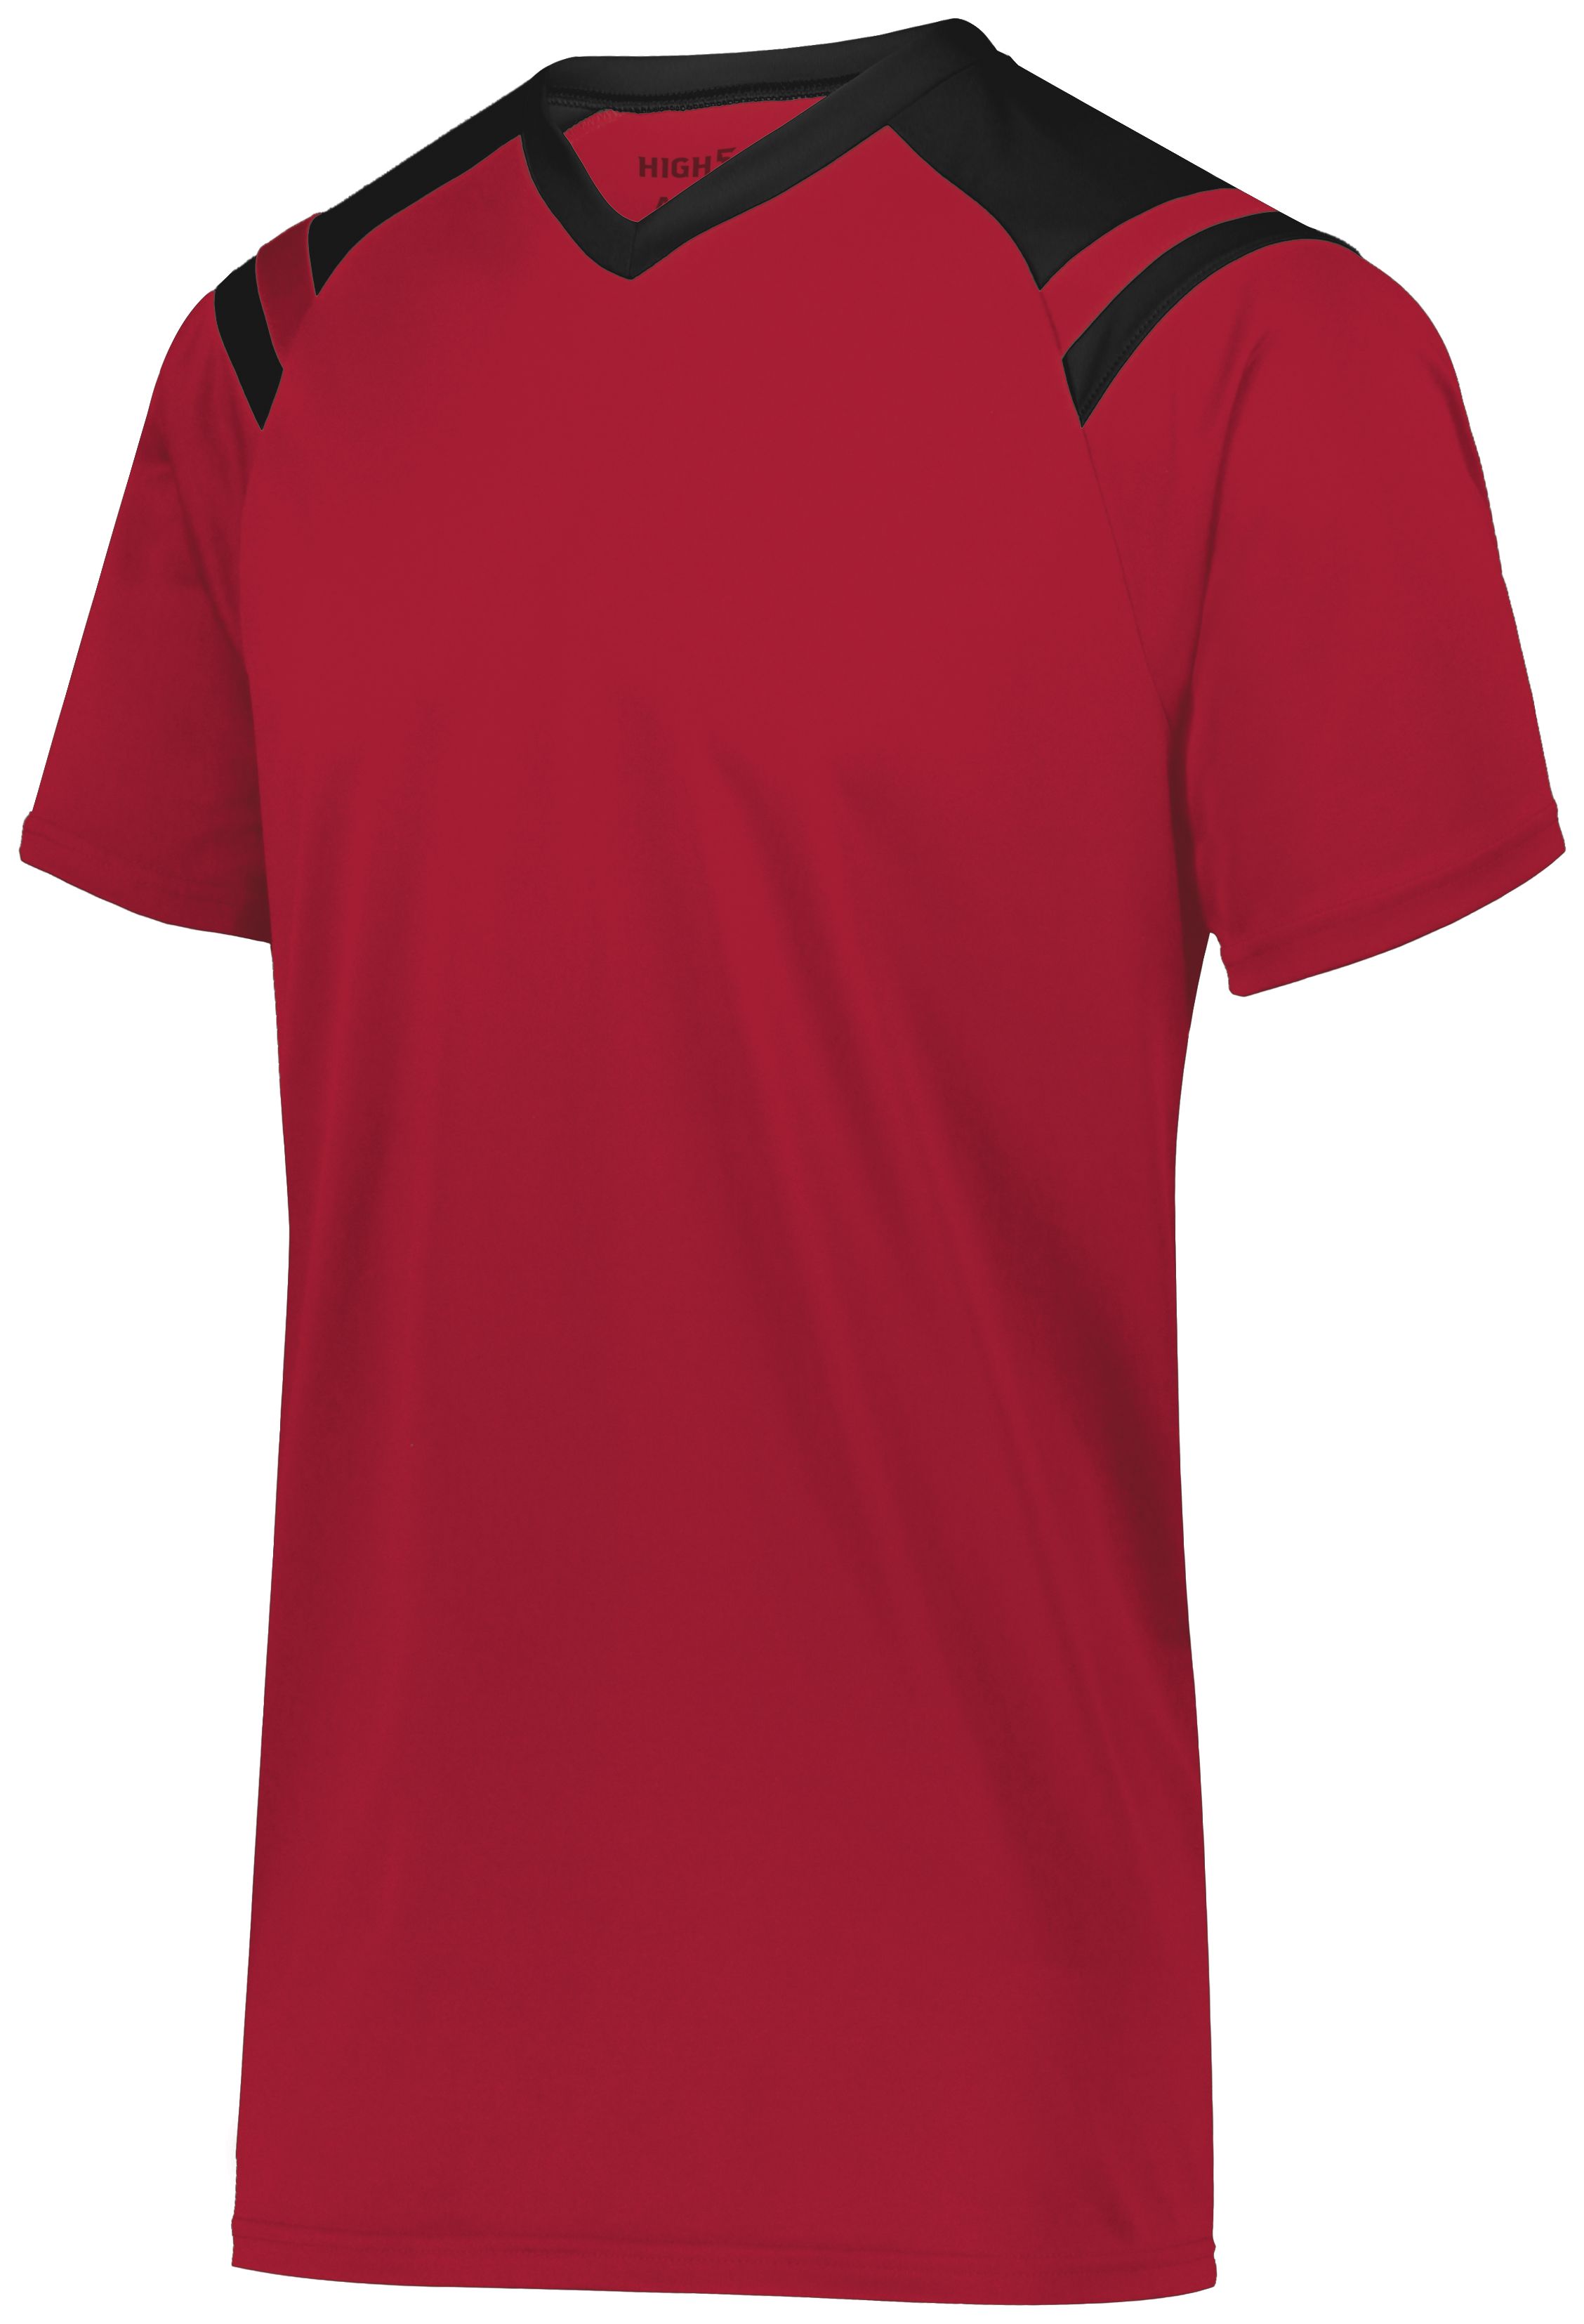 High Five Men's 100% Polyester Wicking Knit Sheffield Jersey T-Shirt ...